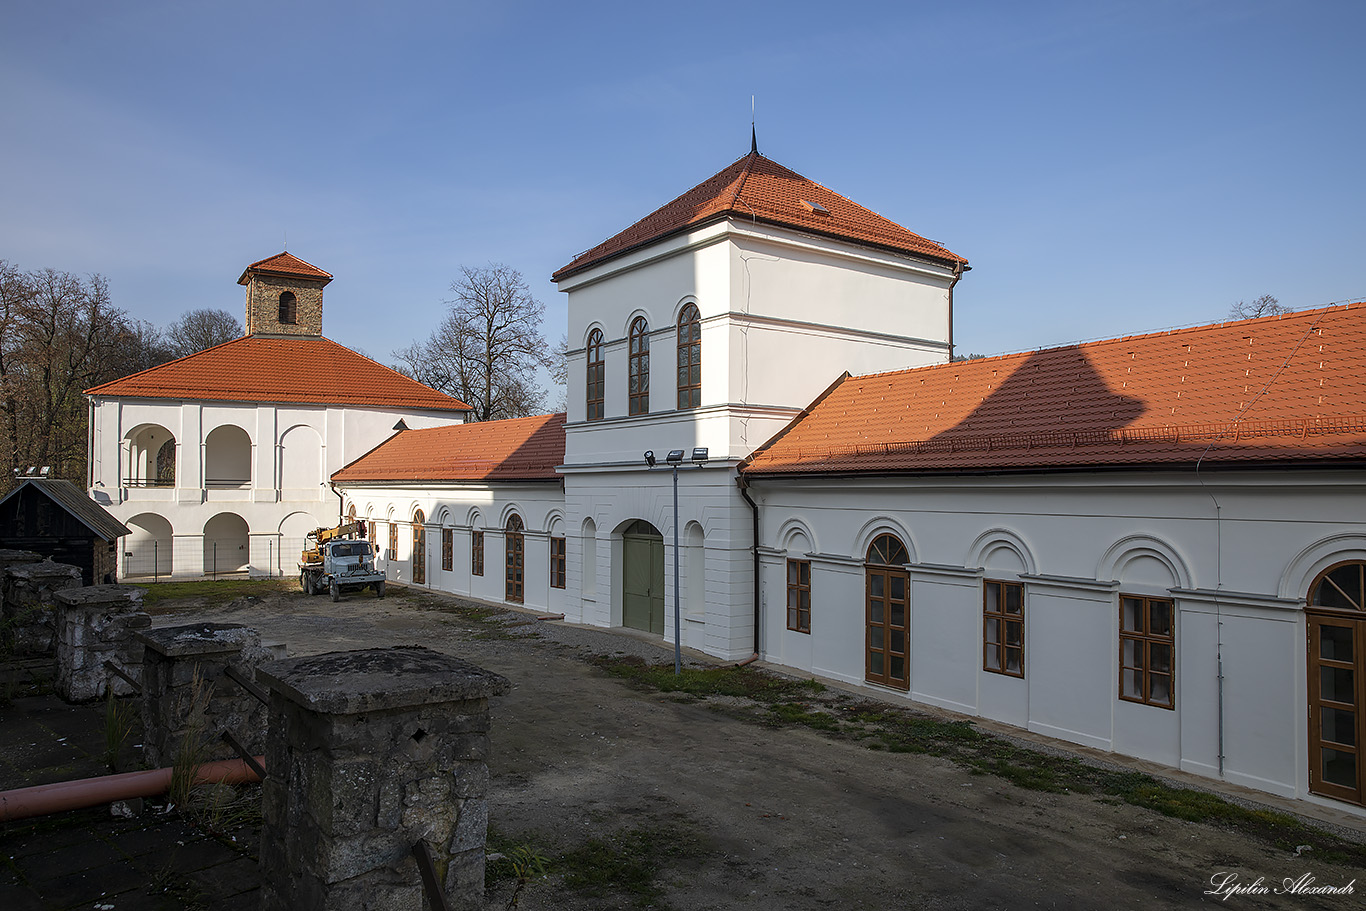 Будатинский замок (Budatínsky hrad)